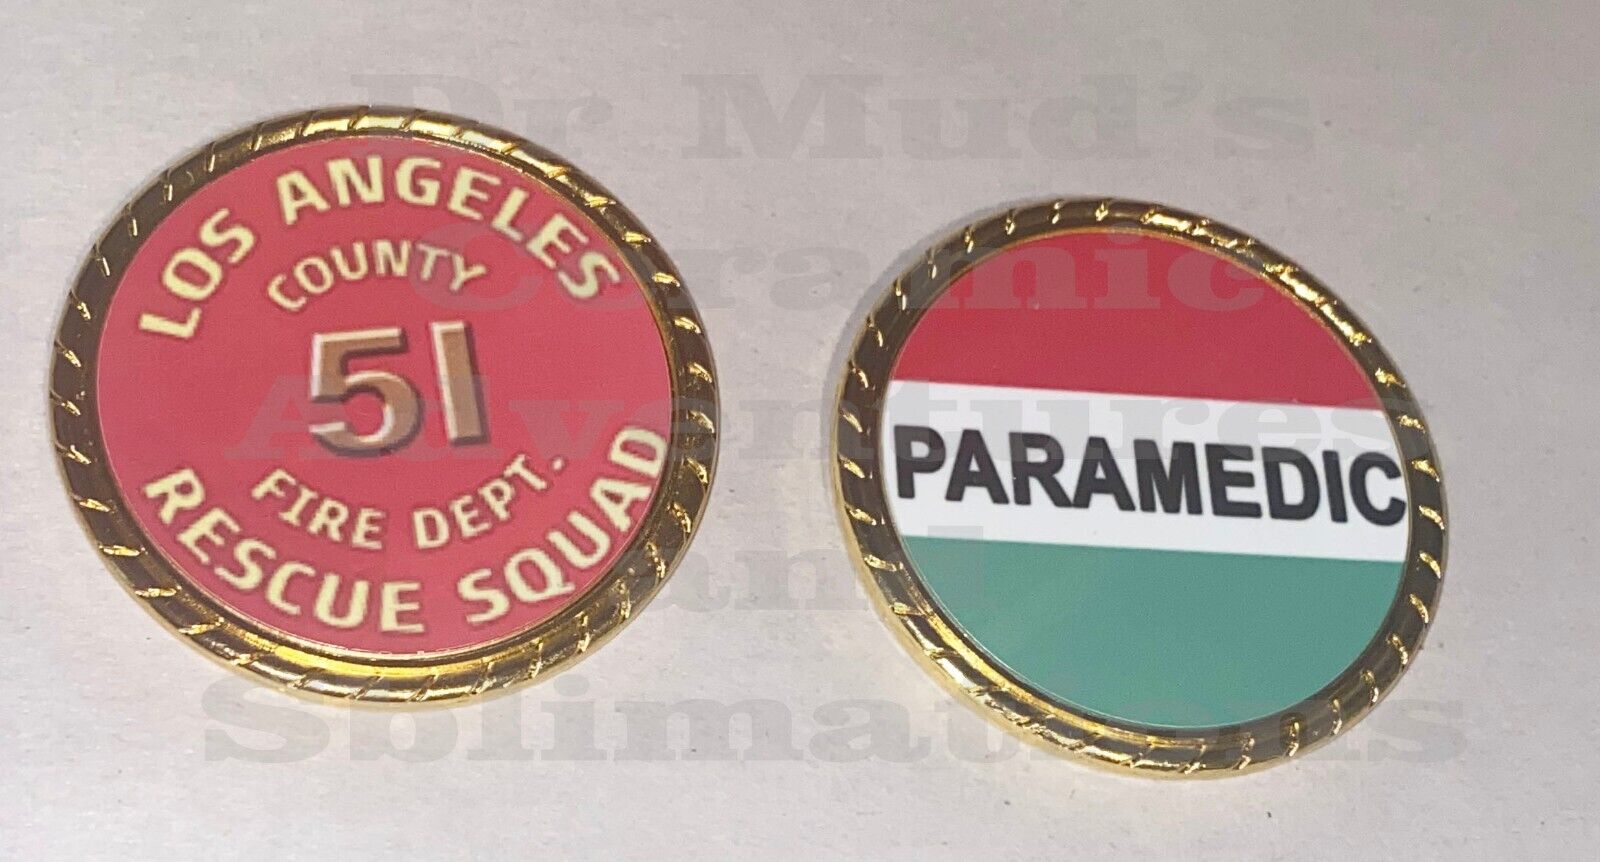 LA County Squad 51 fire fighter Paramedic Rescue Recognition Coin